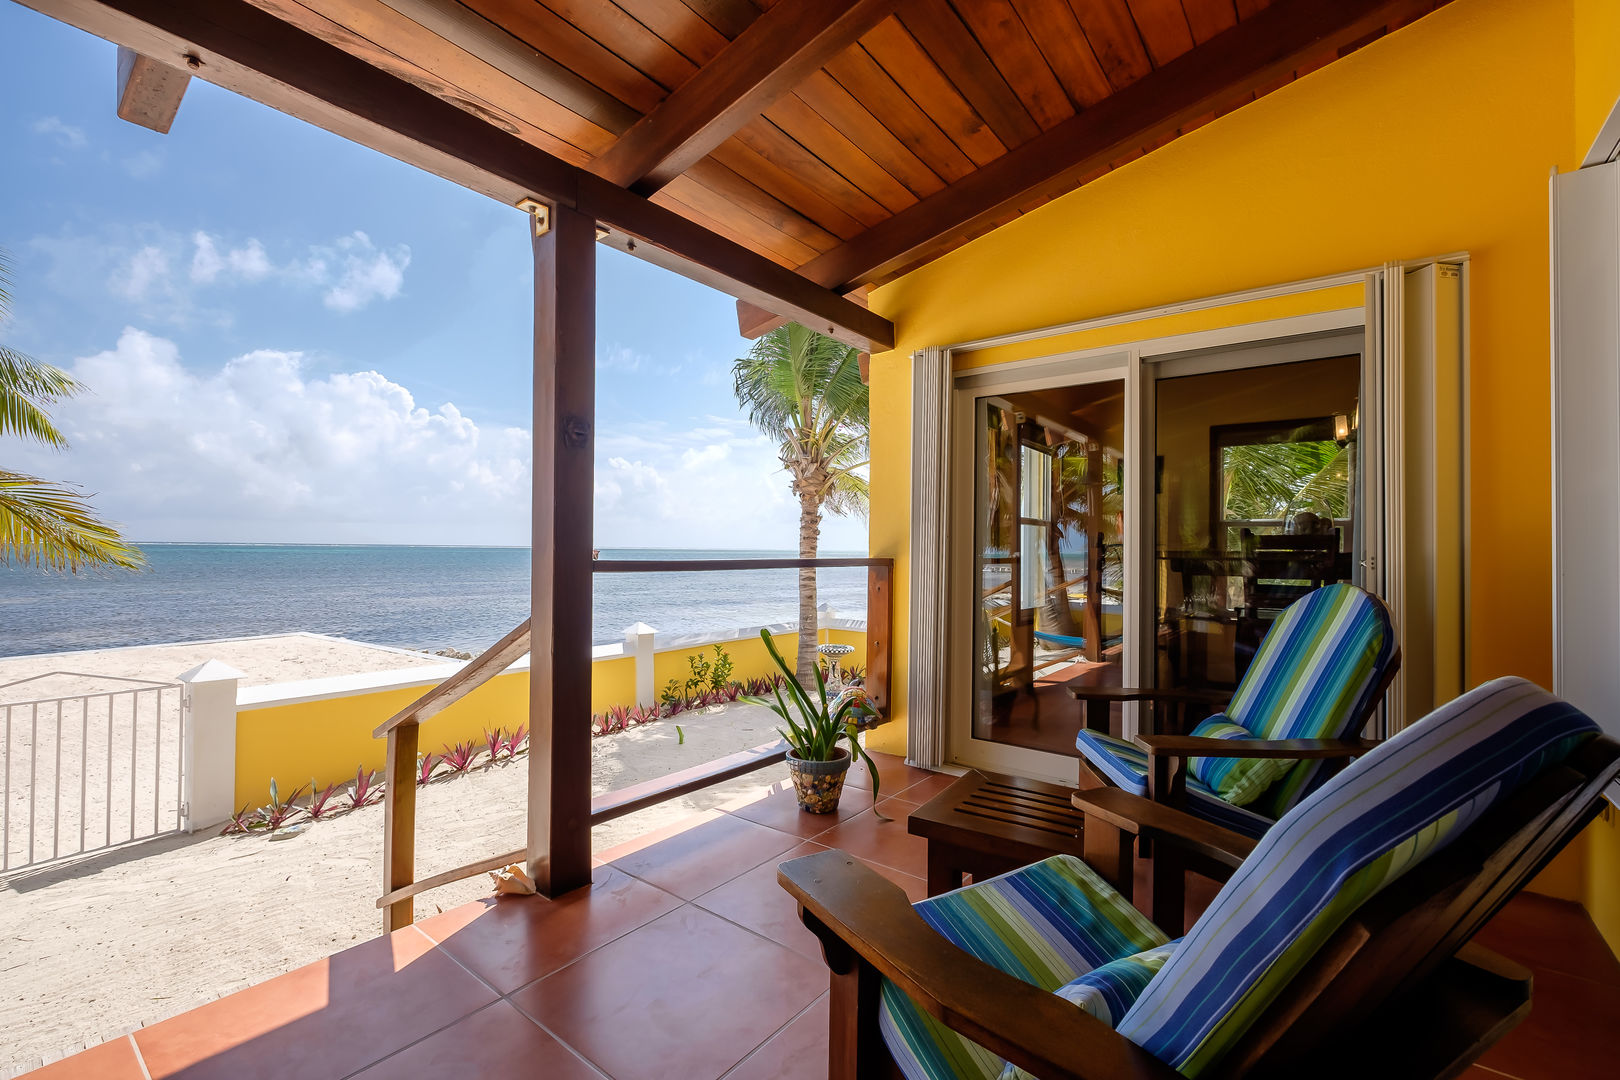 Casa De Bonita lower deck with private beach view. Front door view